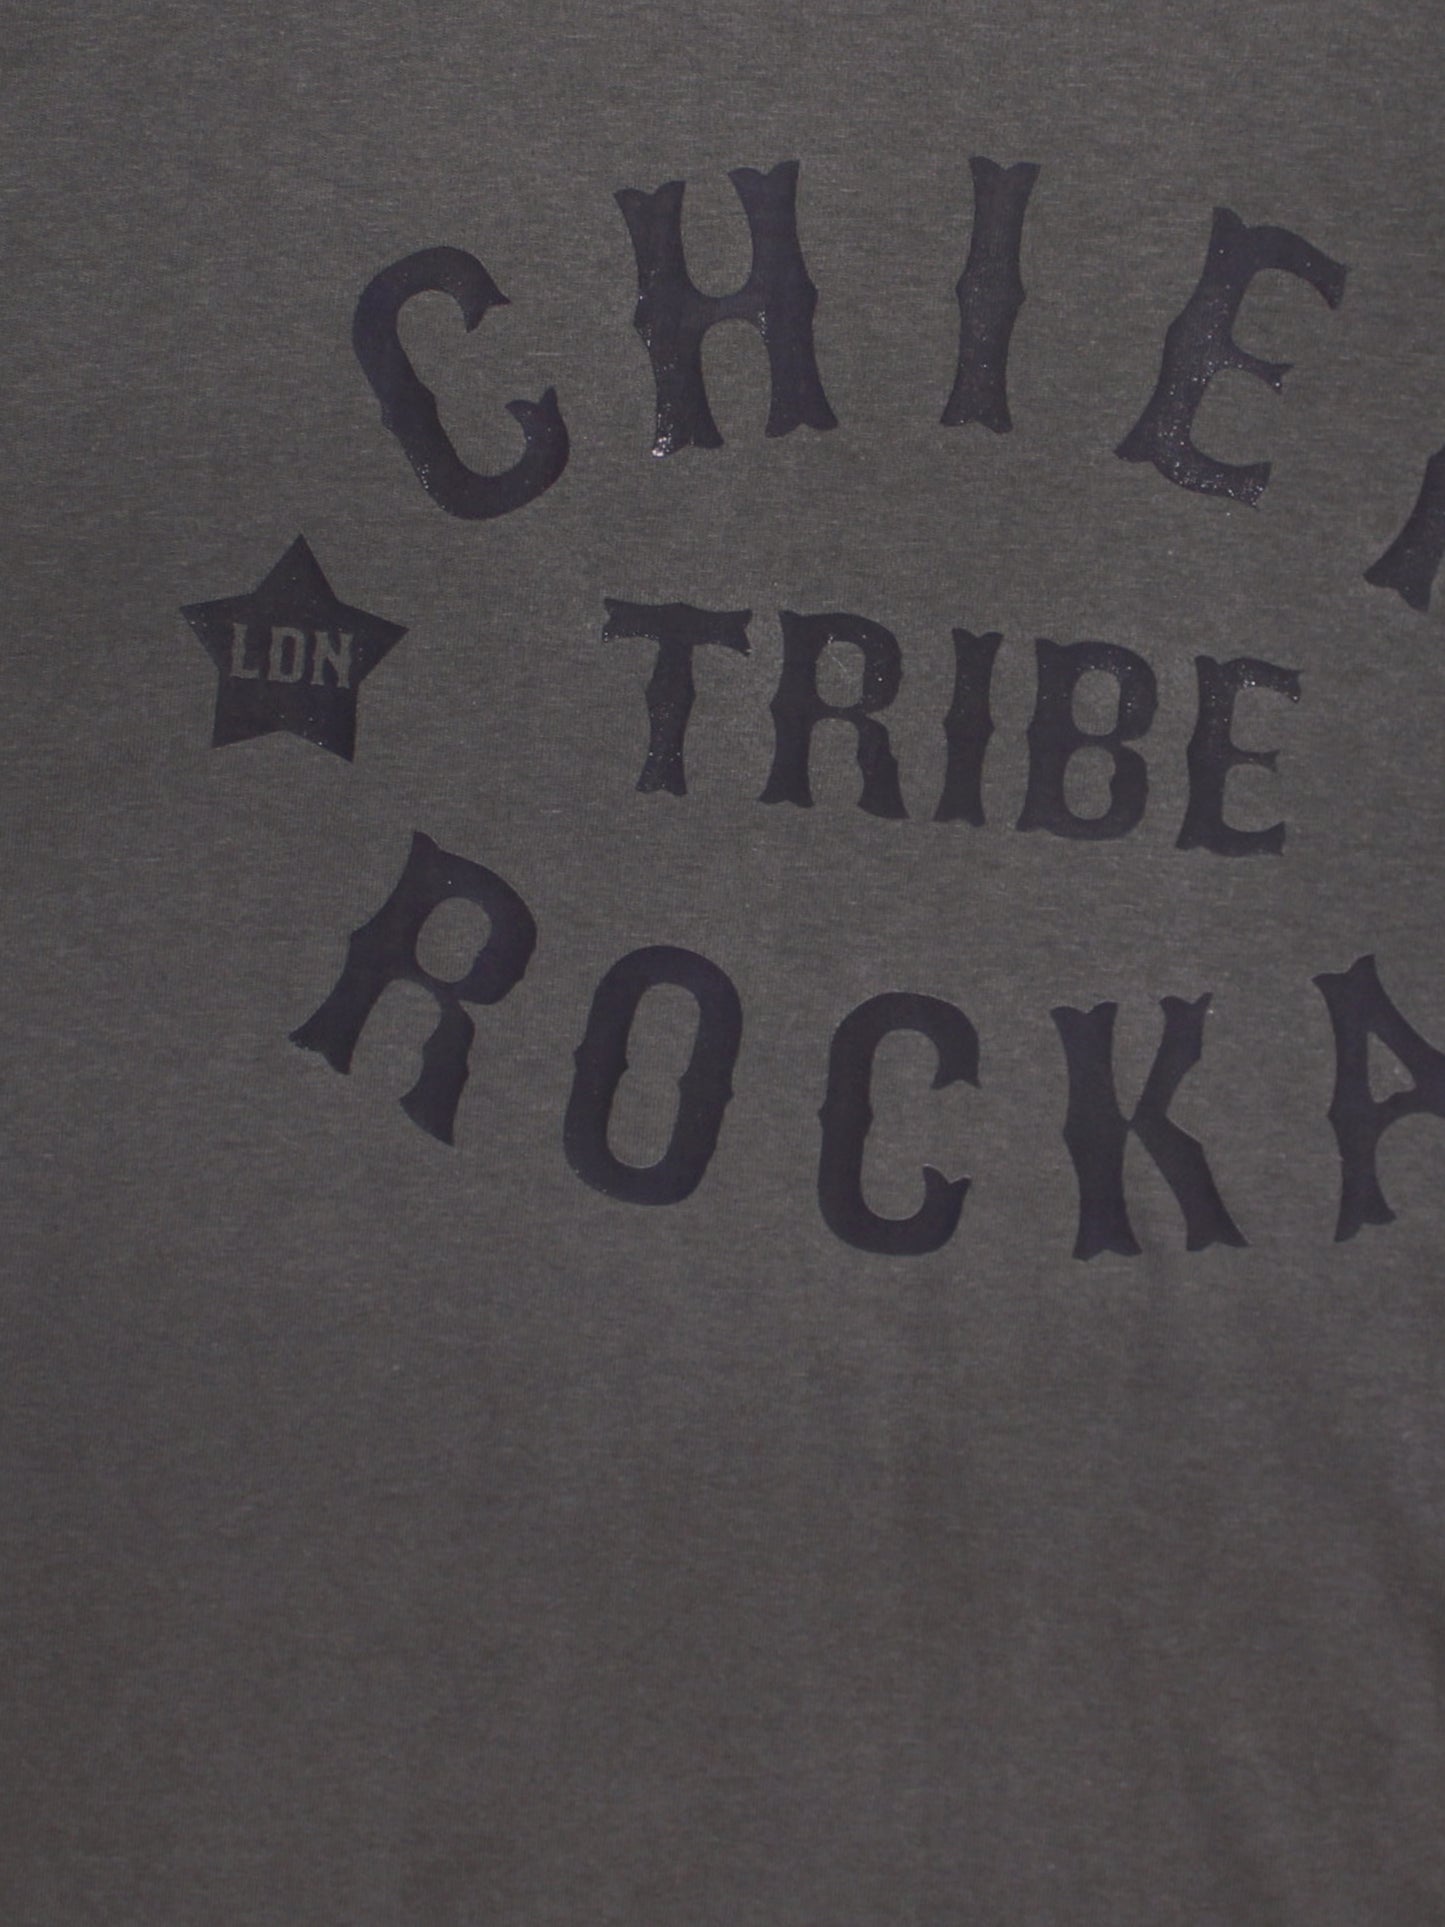 'Tribe' Classic T-Shirt Dark Shadow